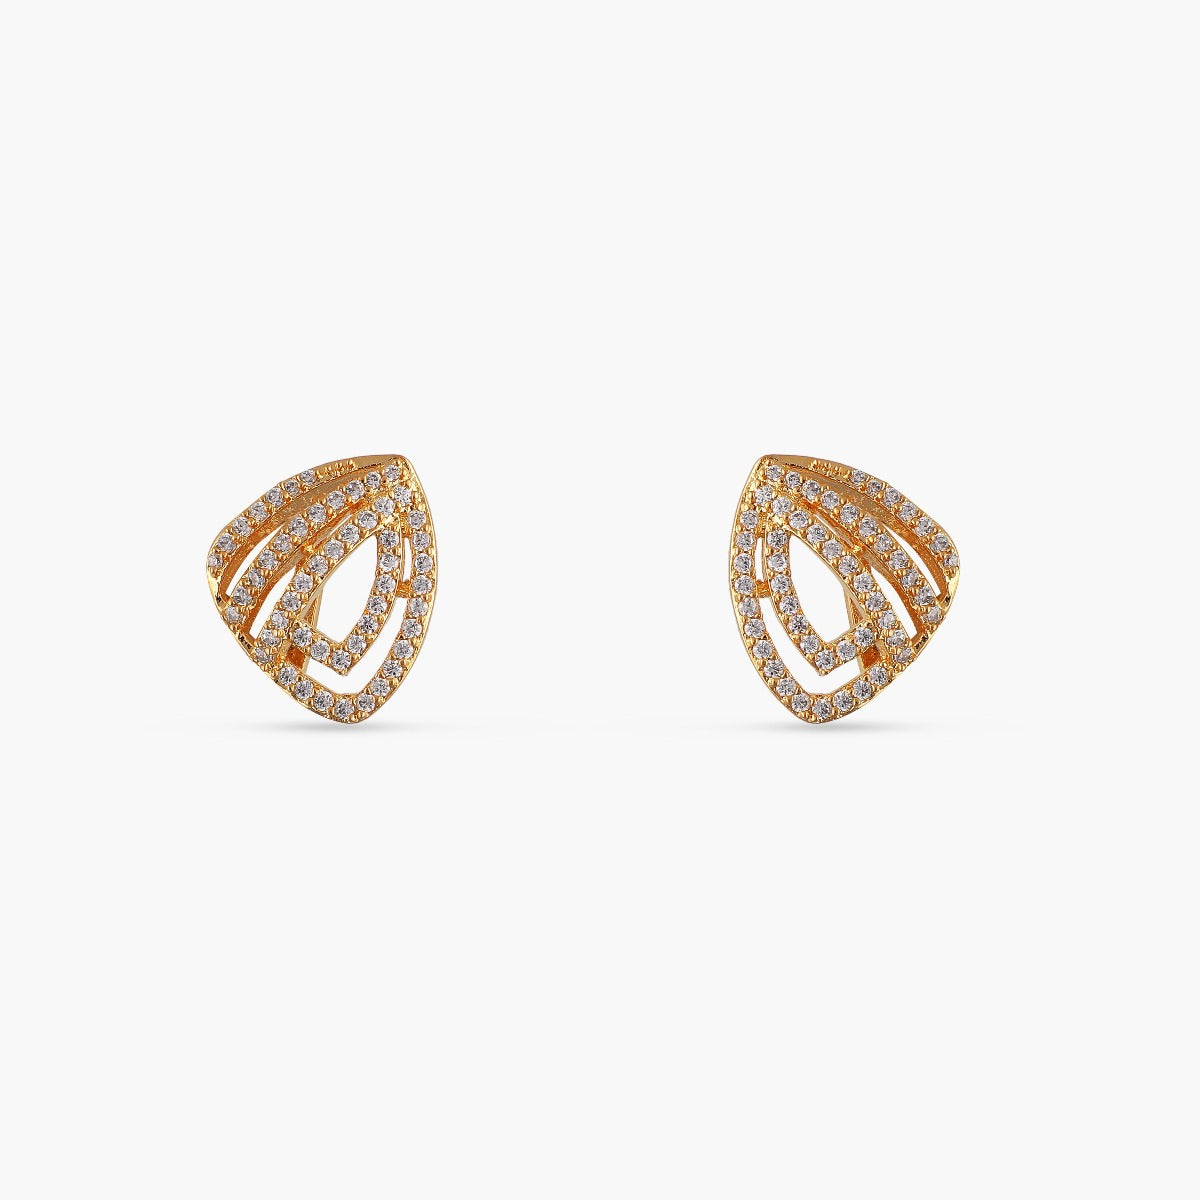 Mia By Tanishq Diamond Ring Designs 1Gm/Rs.5K Starts😍| Tanishq Jewellery|  Gold Diamond Ring Designs - YouTube